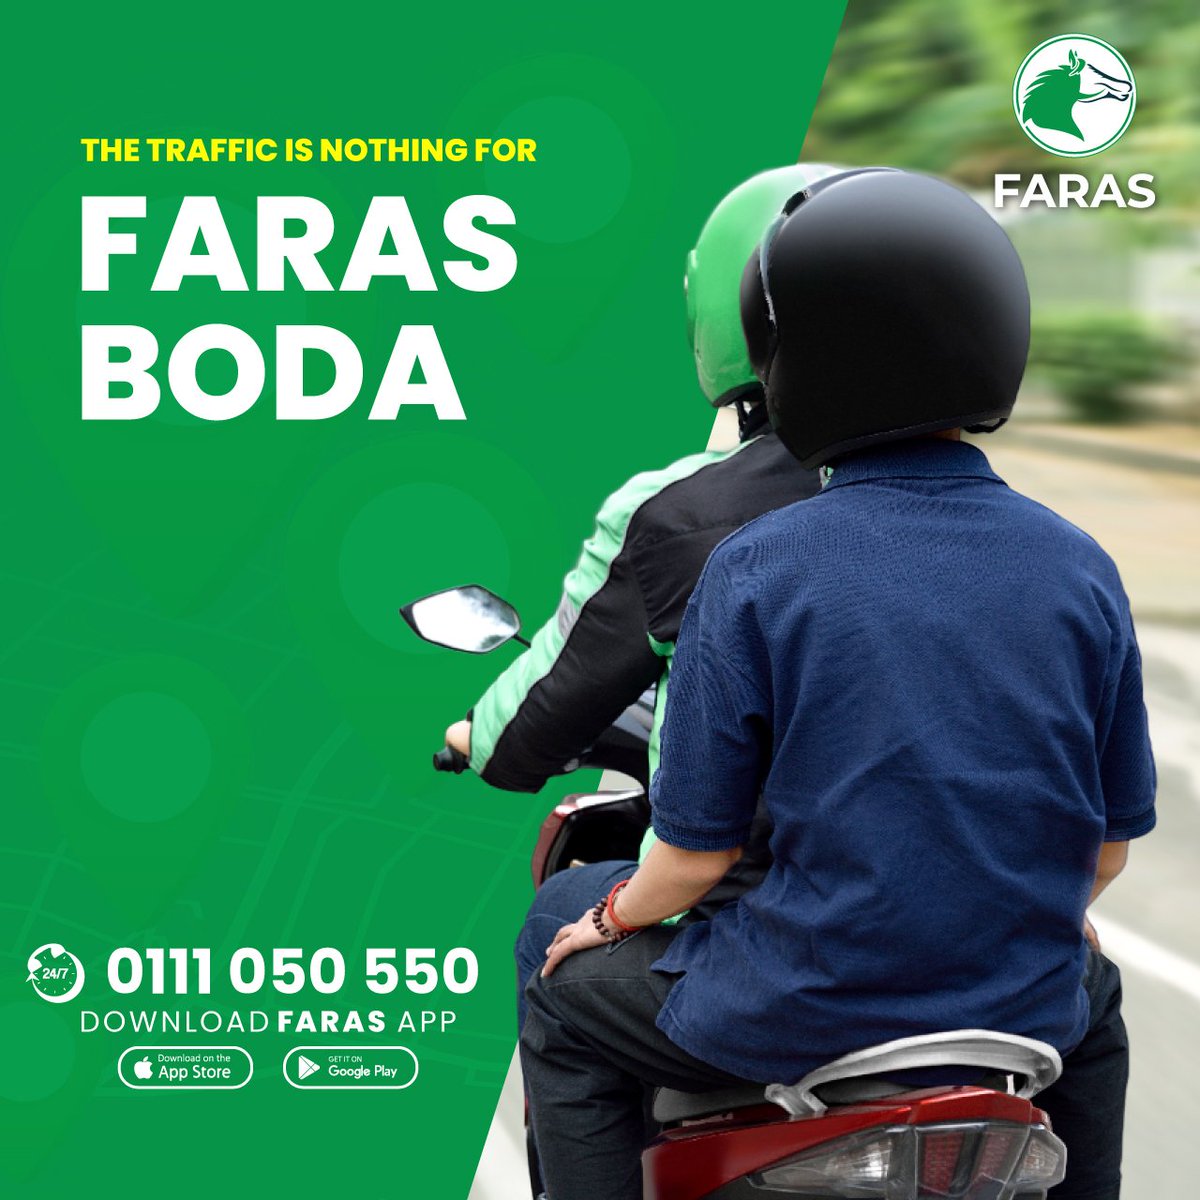 Super Sato na Faras Boda, usikae kwa jam, just request Faras Boda and explore the City bila stress. Faras Boda is the best 👌 #FarasBodaRewards